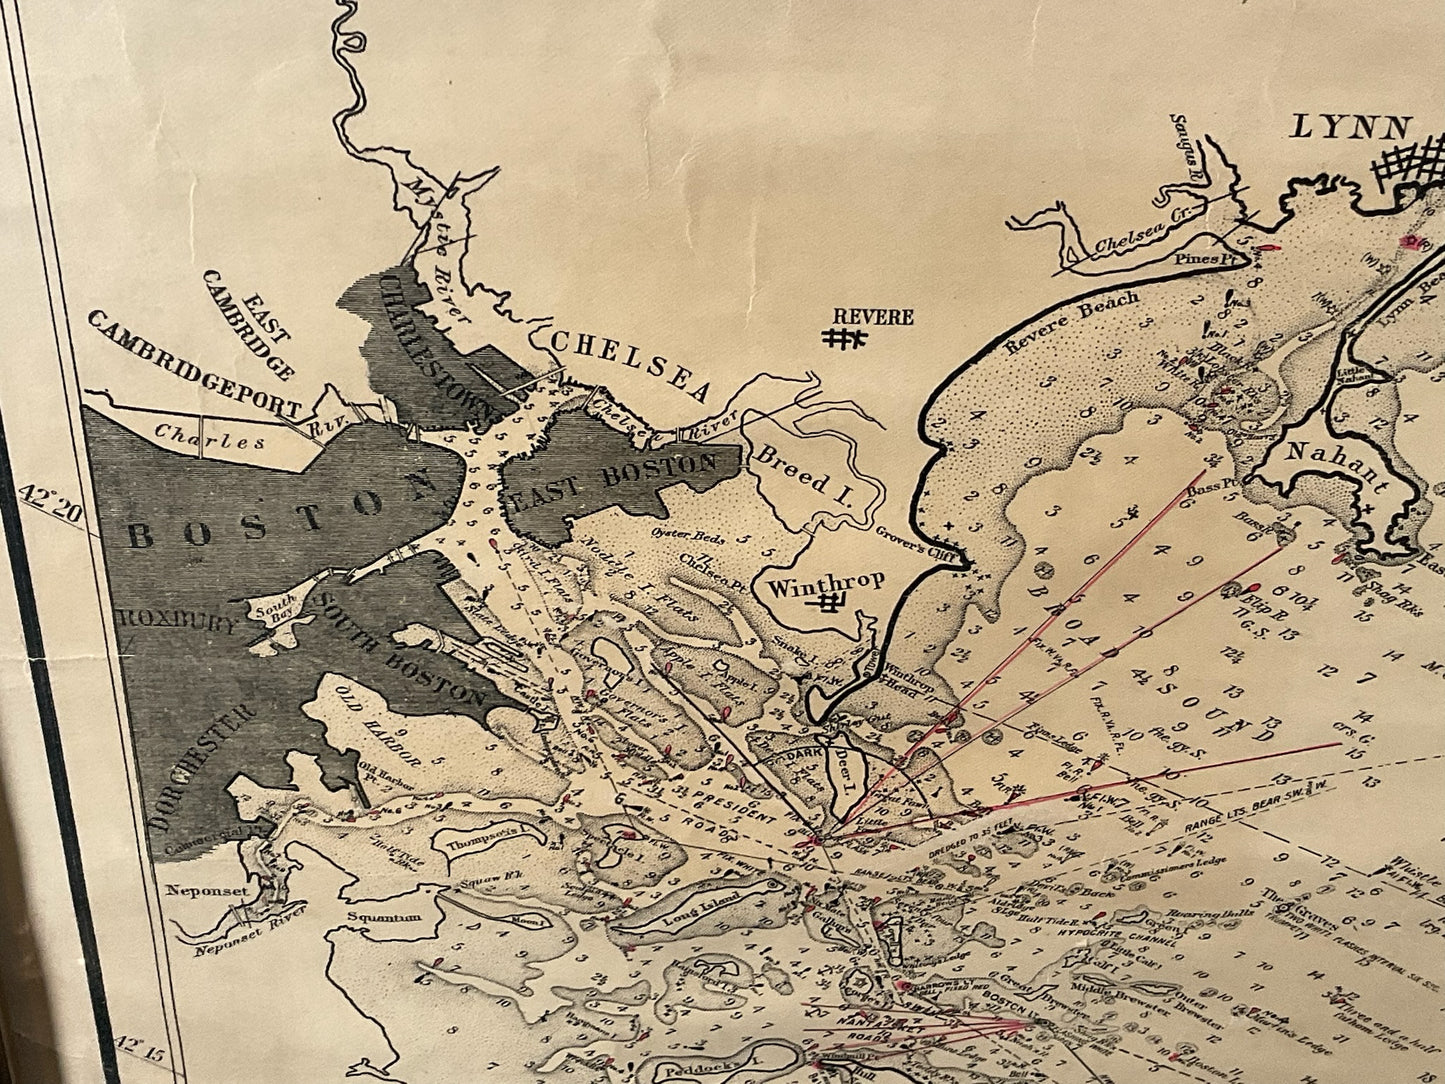 1918 George Eldridge Chart of Massachusetts Bay